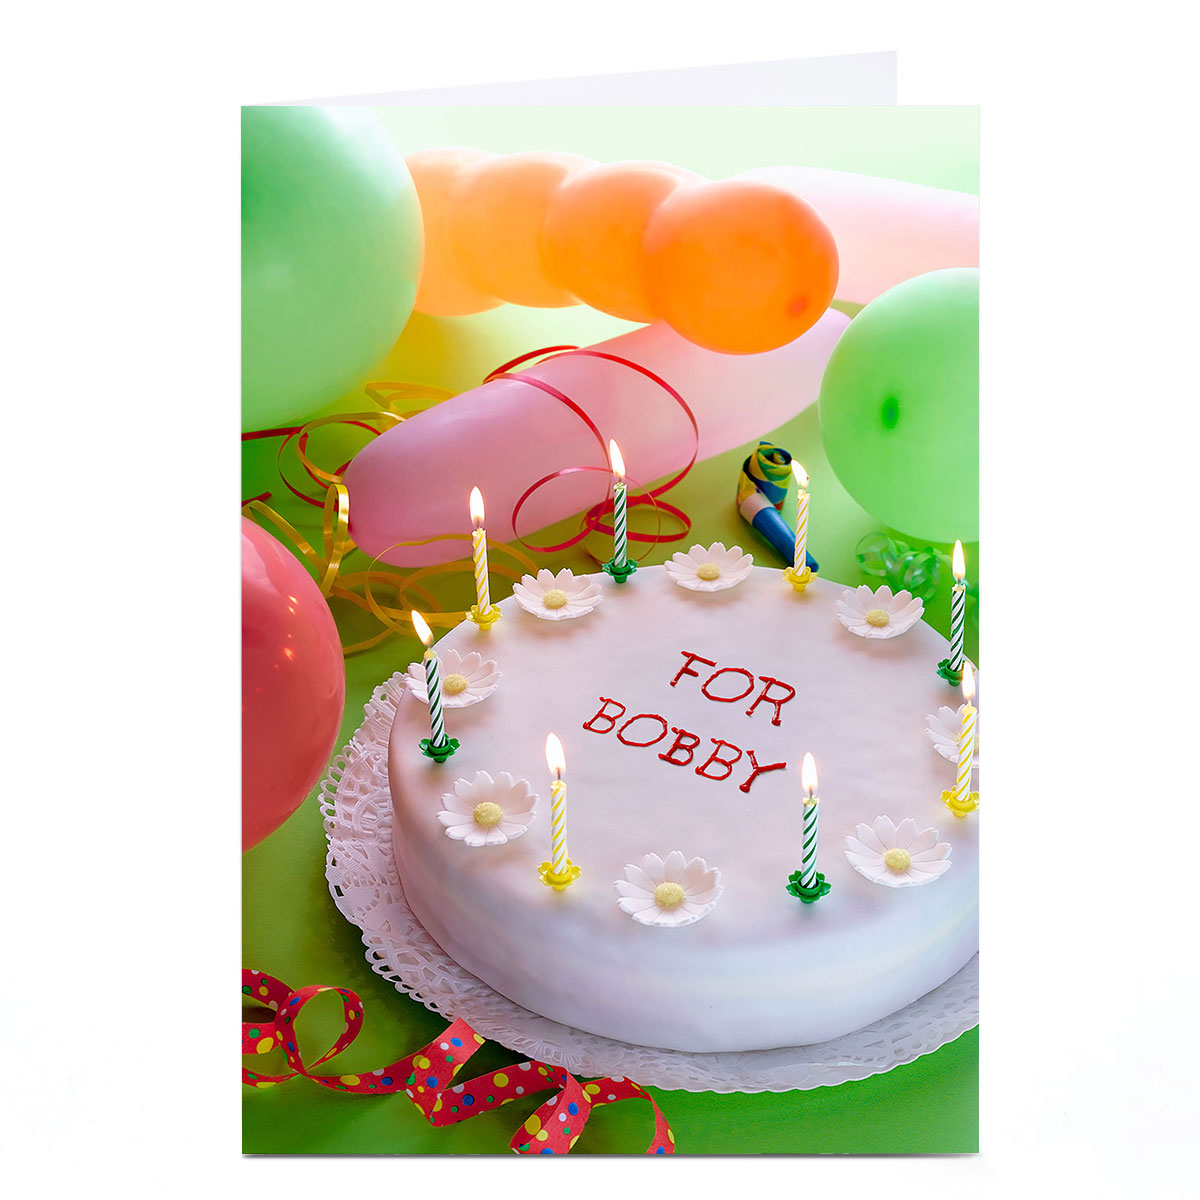 Personalised Birthday Card - Cake & Balloons